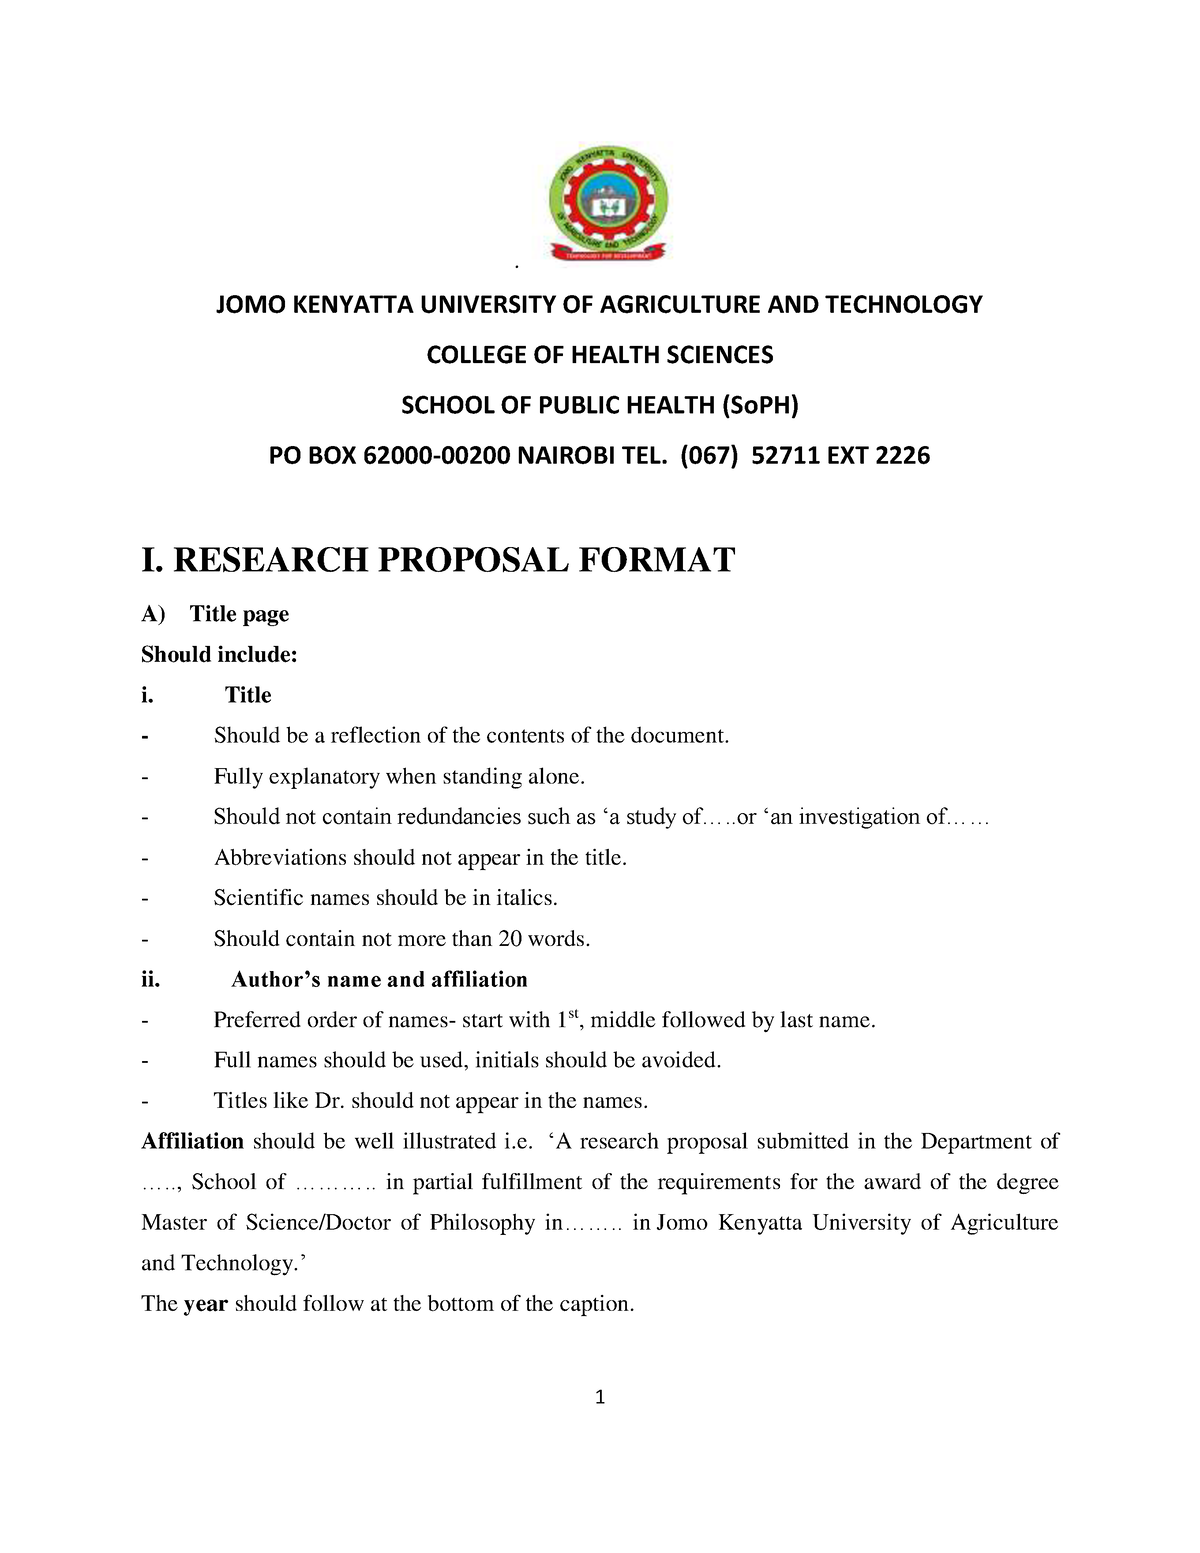 research proposal in kenya